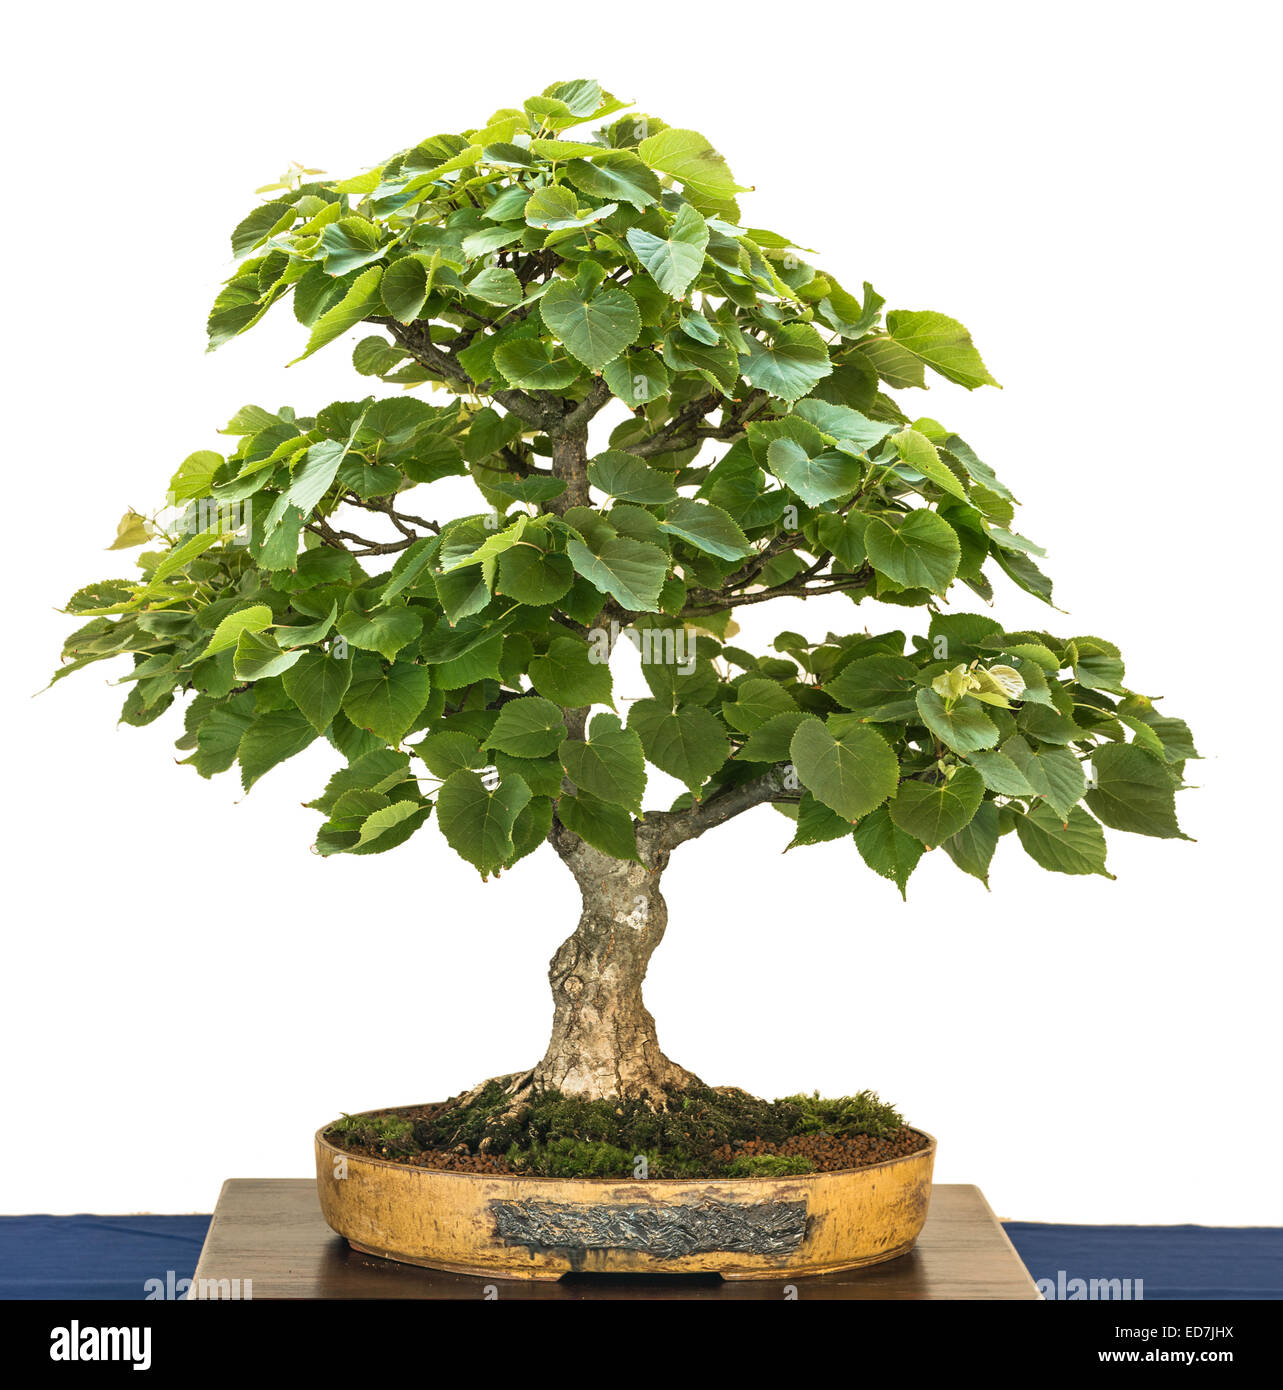 Small leaved linden (Tilia cordata) als bonsai tree Stock Photo - Alamy